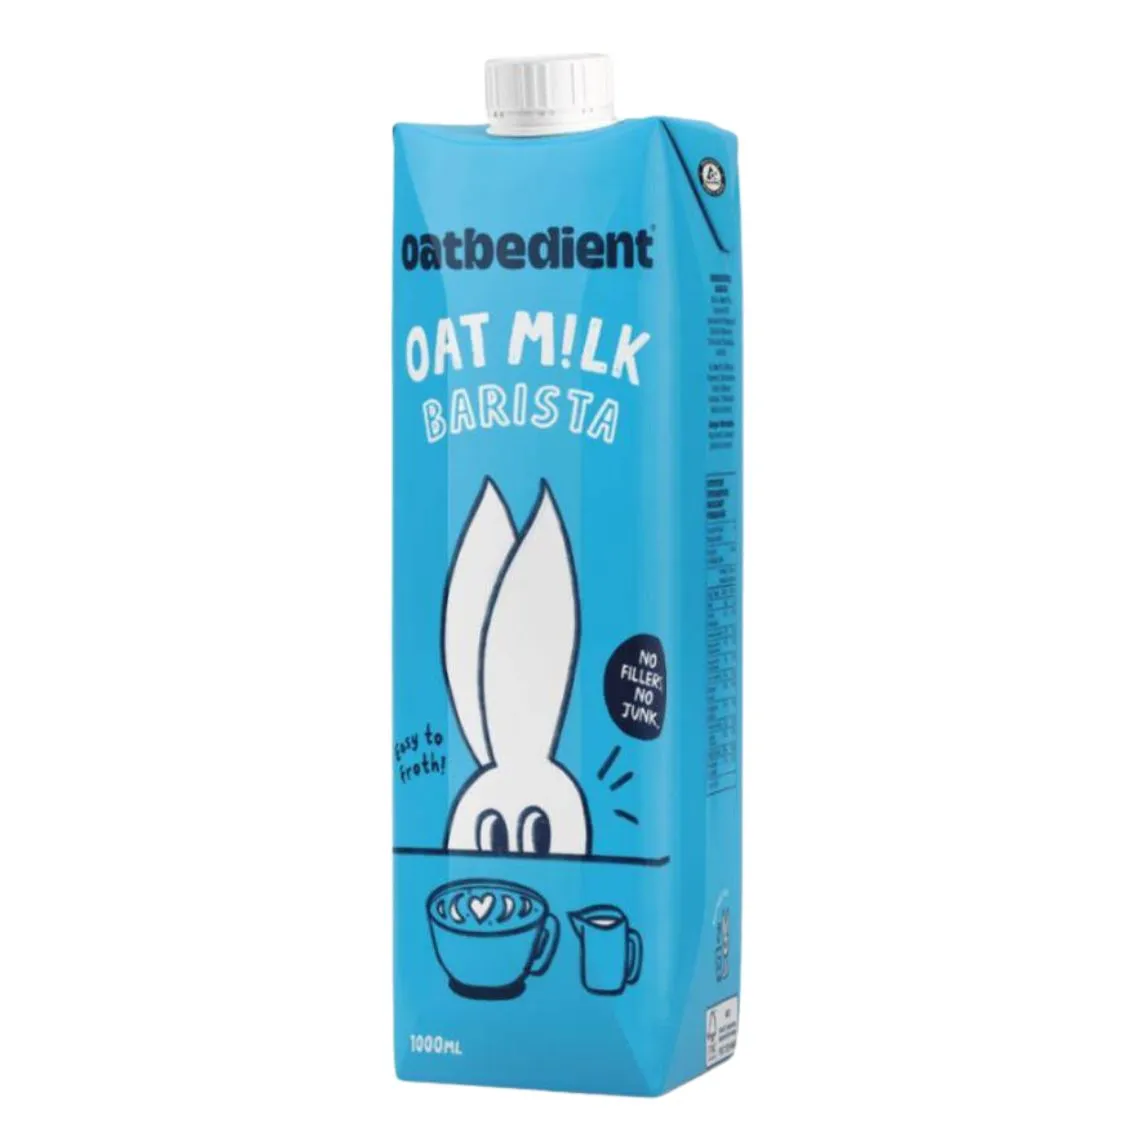 Oatbedient oat milk barista 1l carton